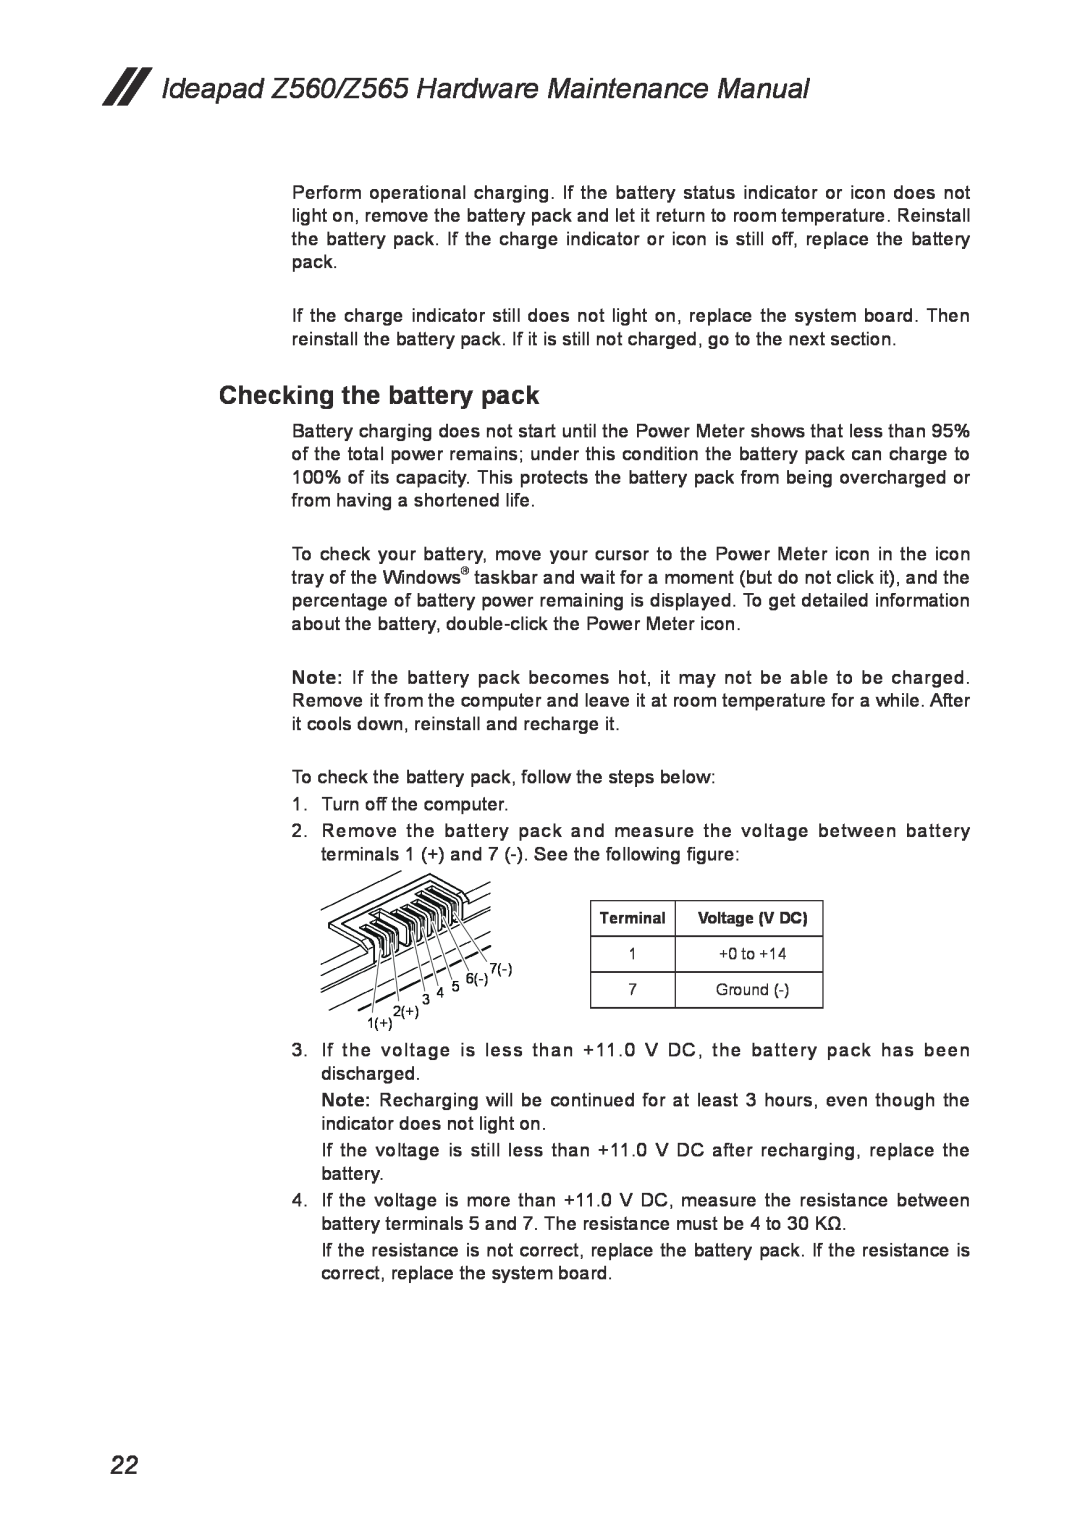 Lenovo manual Checking the battery pack, Ideapad Z560/Z565 Hardware Maintenance Manual 